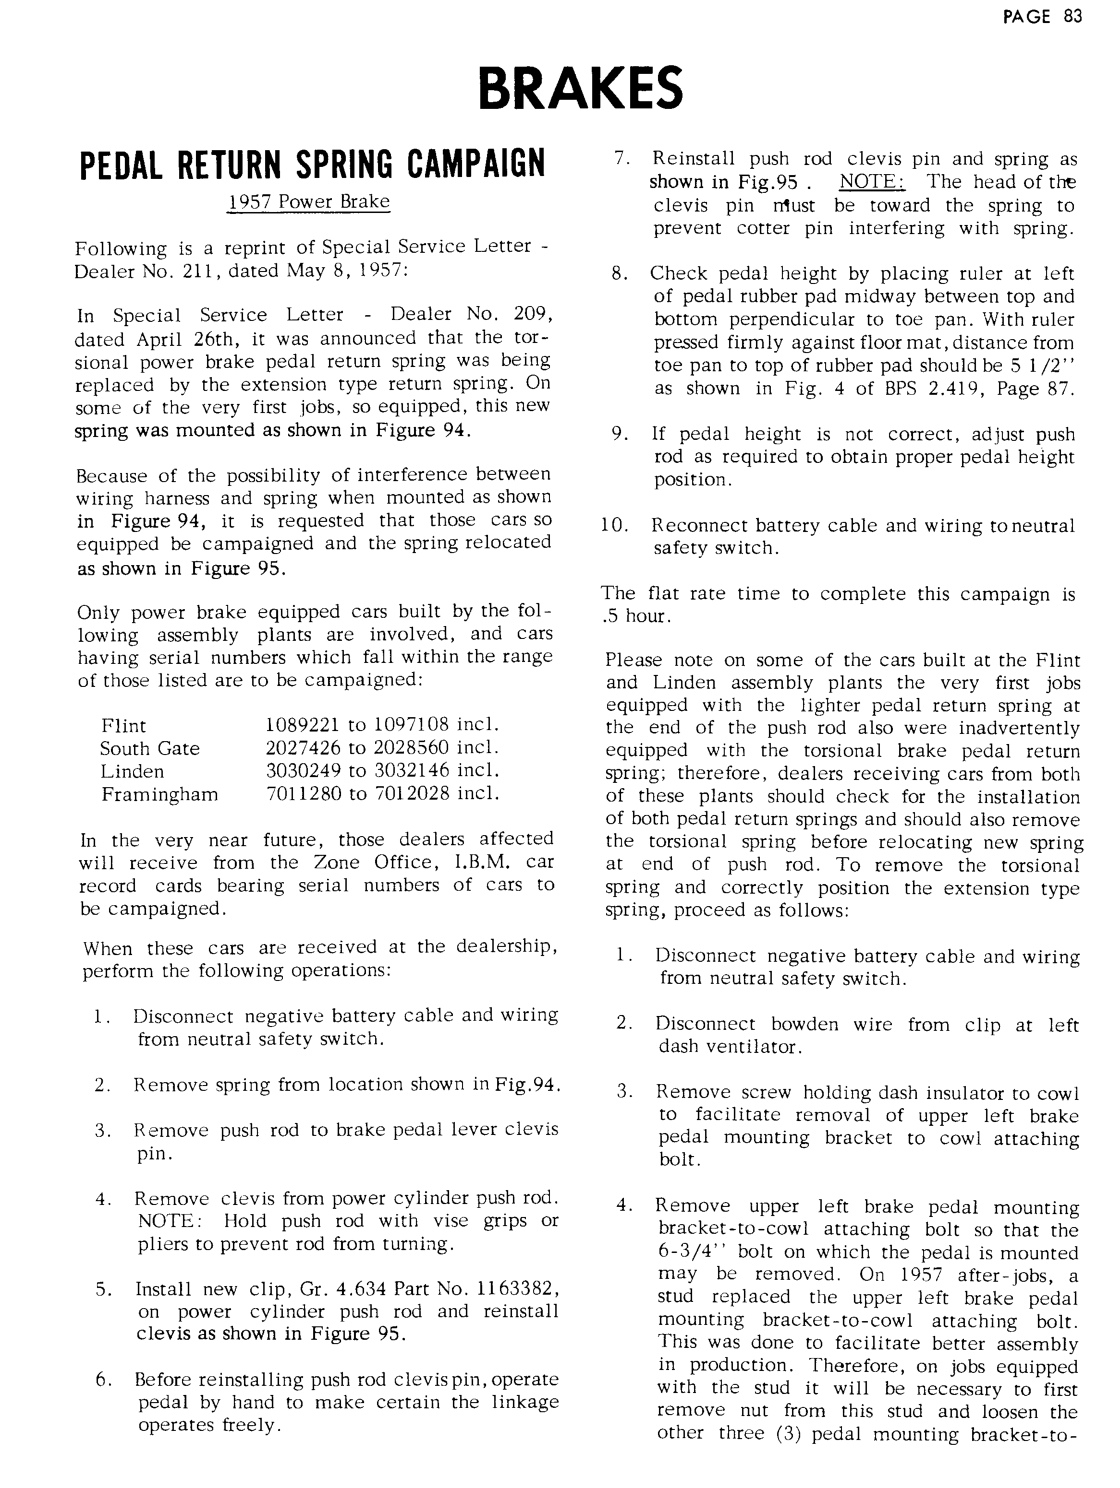 n_1957 Buick Product Service  Bulletins-087-087.jpg